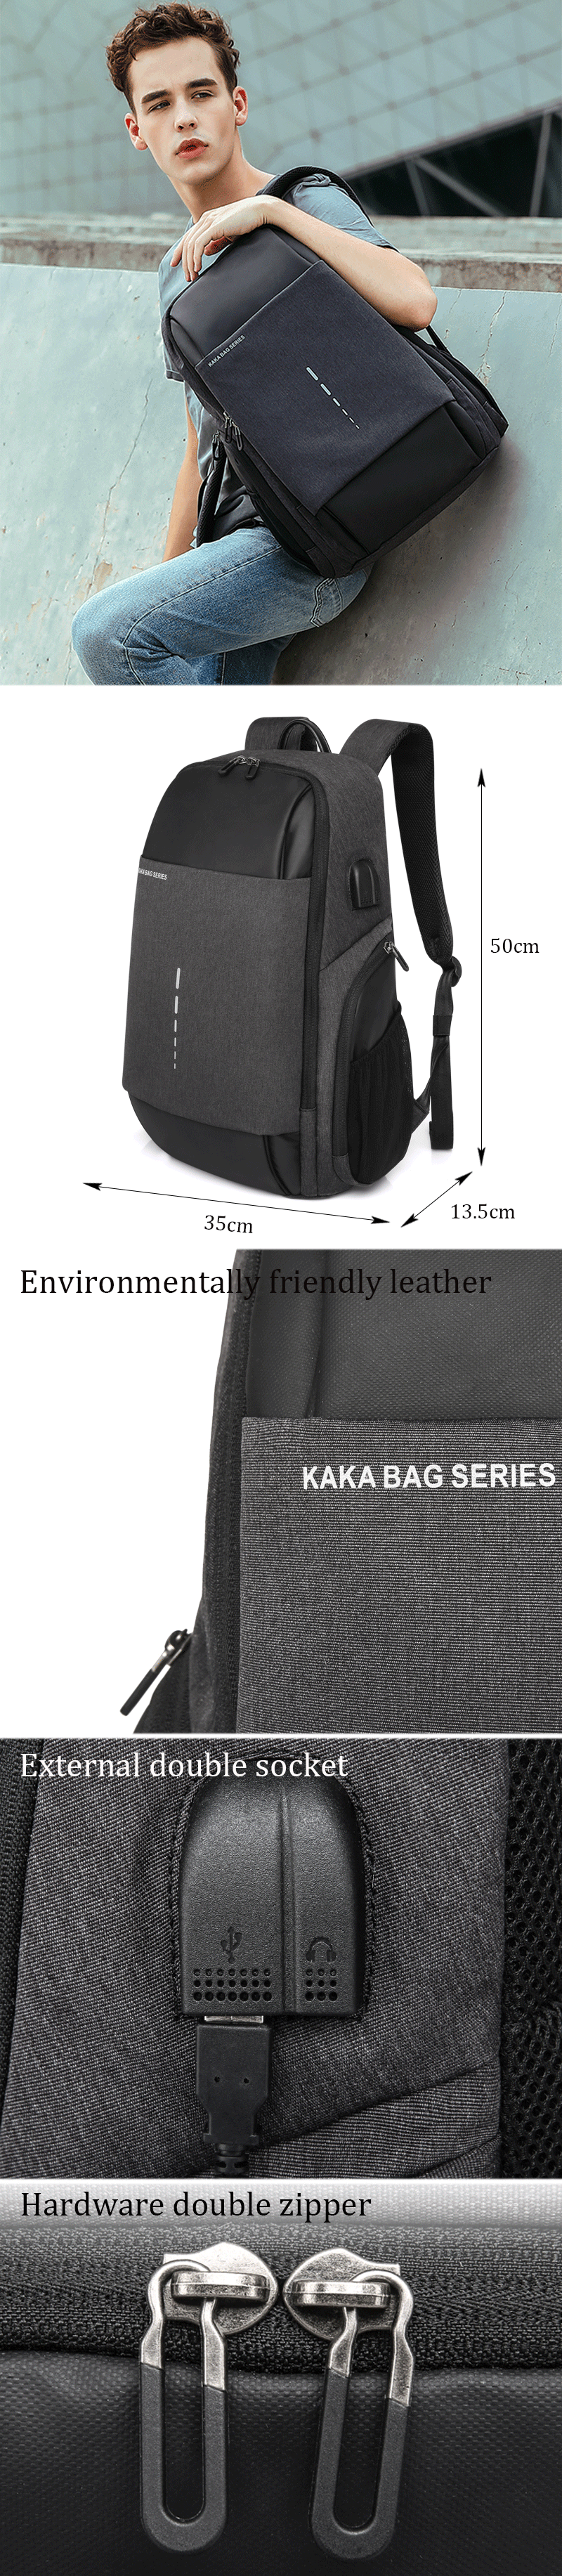 USB-Backpack-Anti-thief-Shoulder-Bag-156-Inch-Laptop-Bag-Camping-Travel-Bag-School-Bag-1364866-1